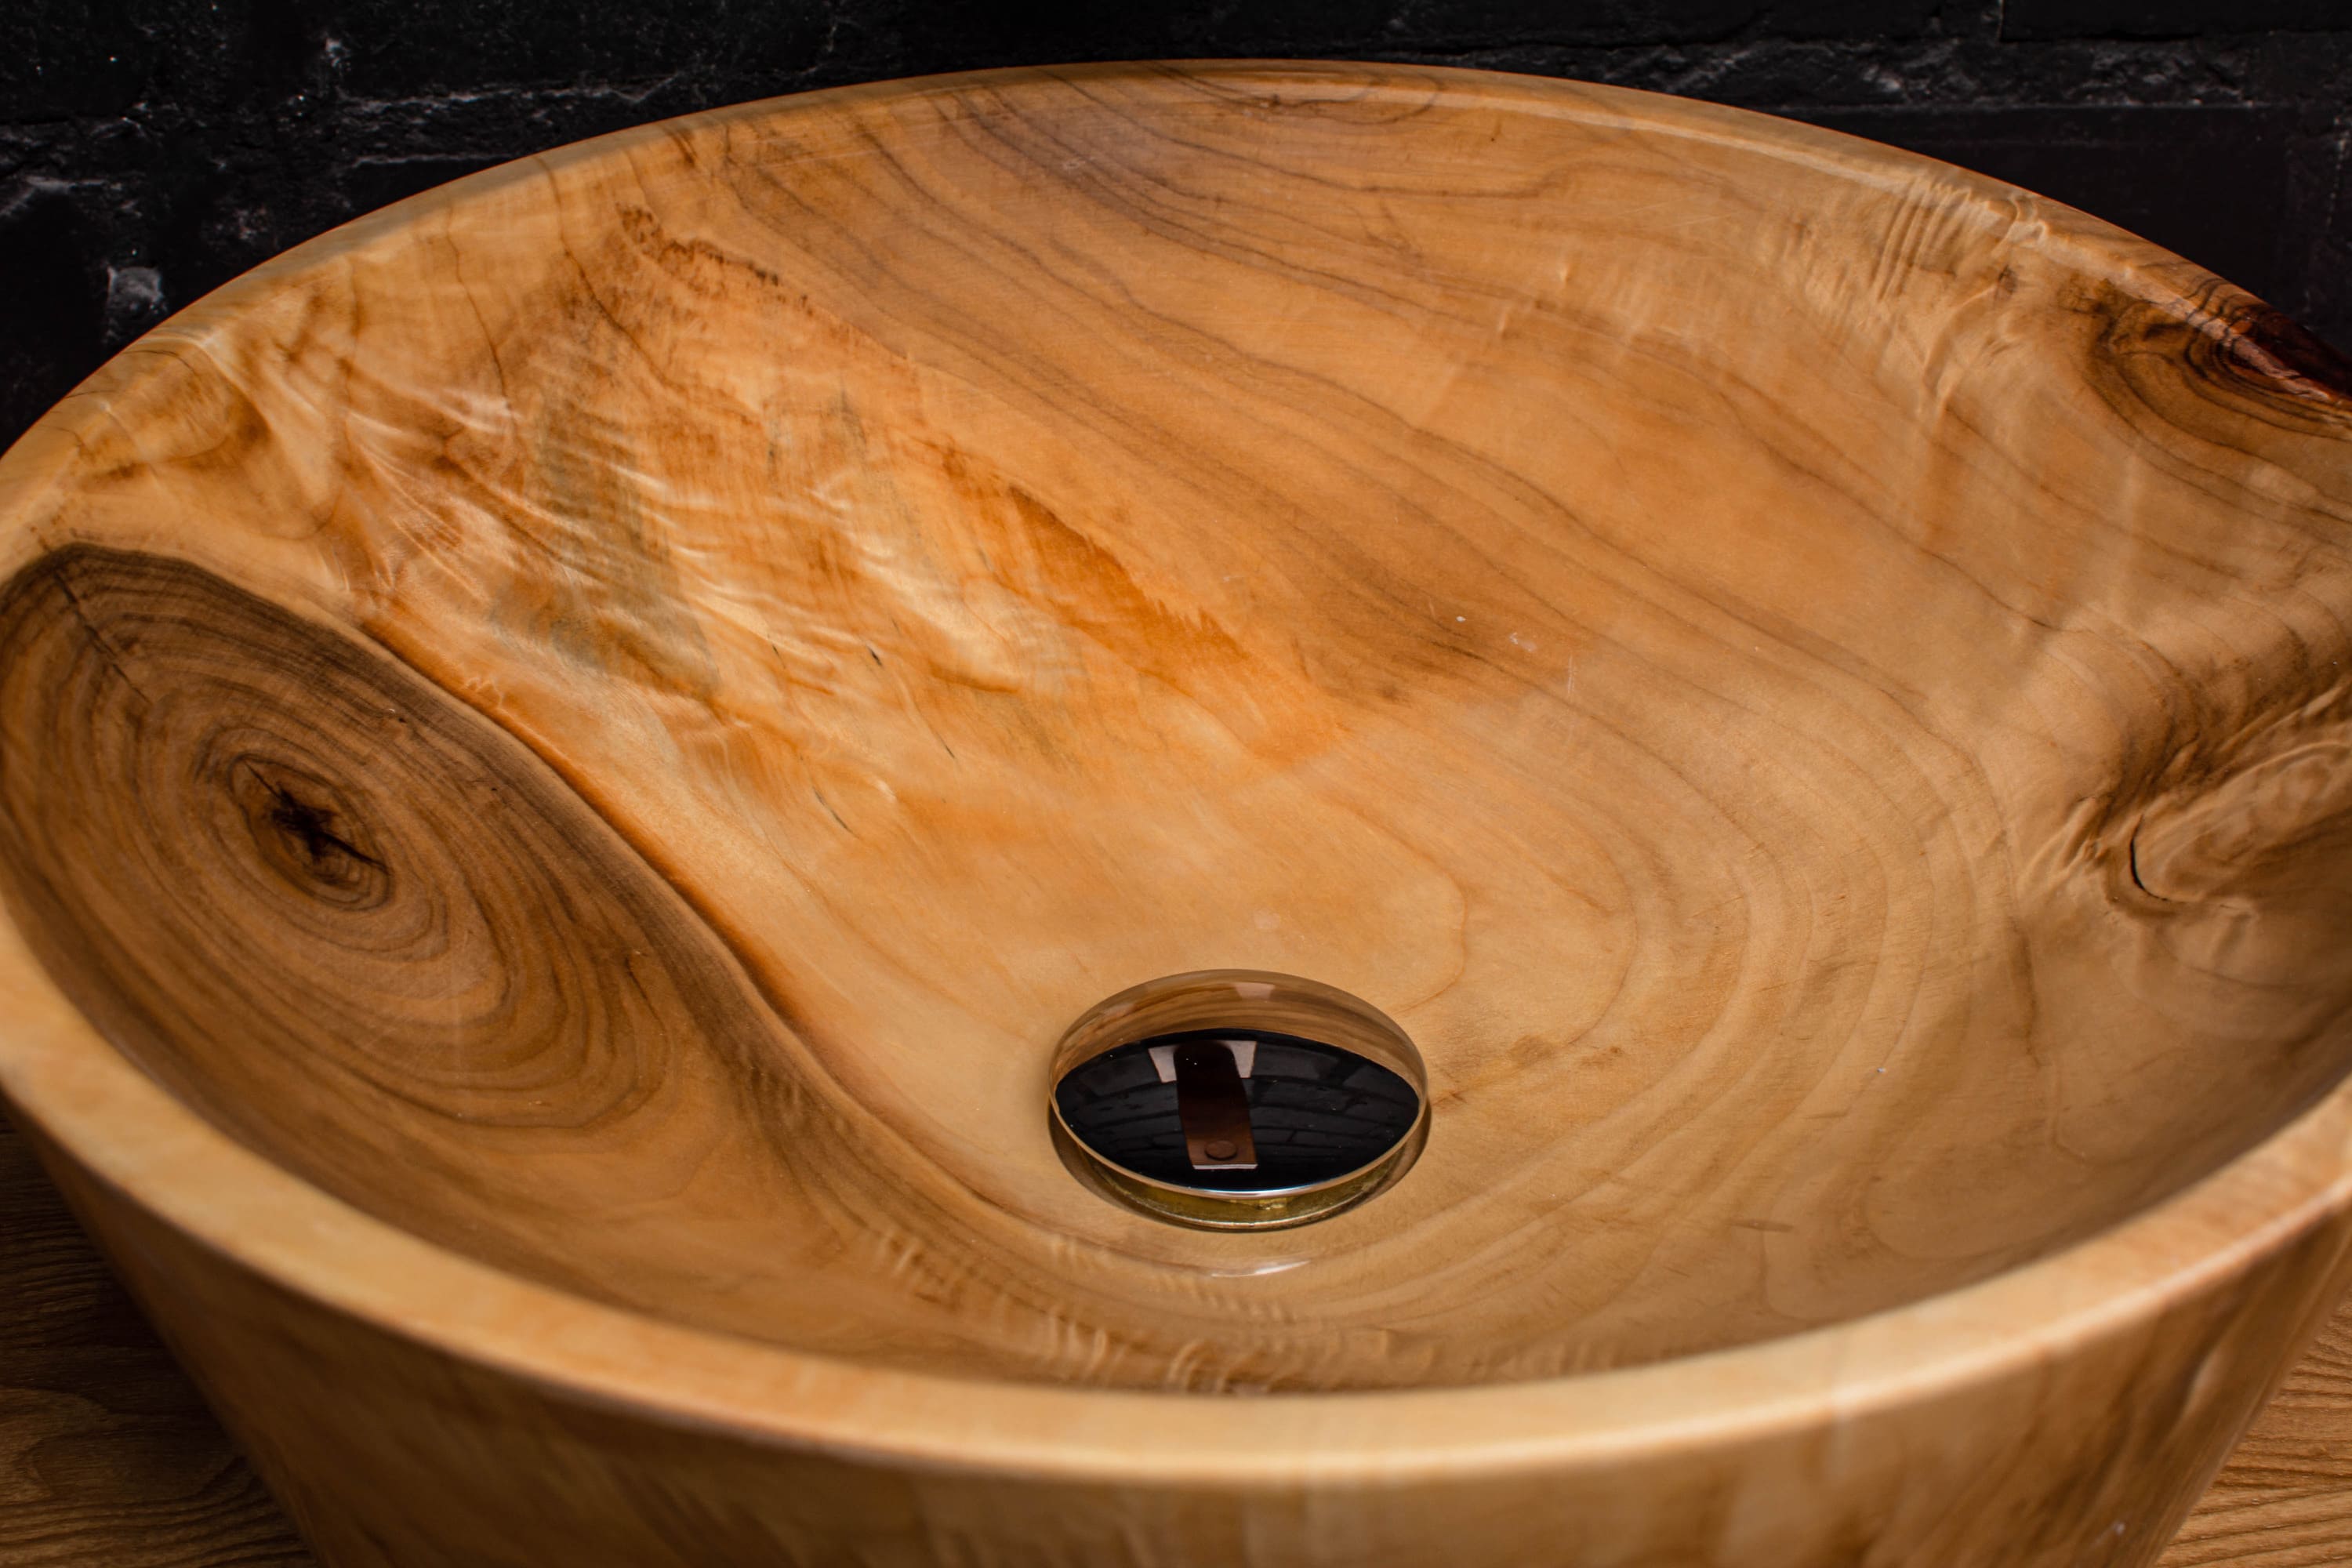 Handcrafted Wooden Sink #04